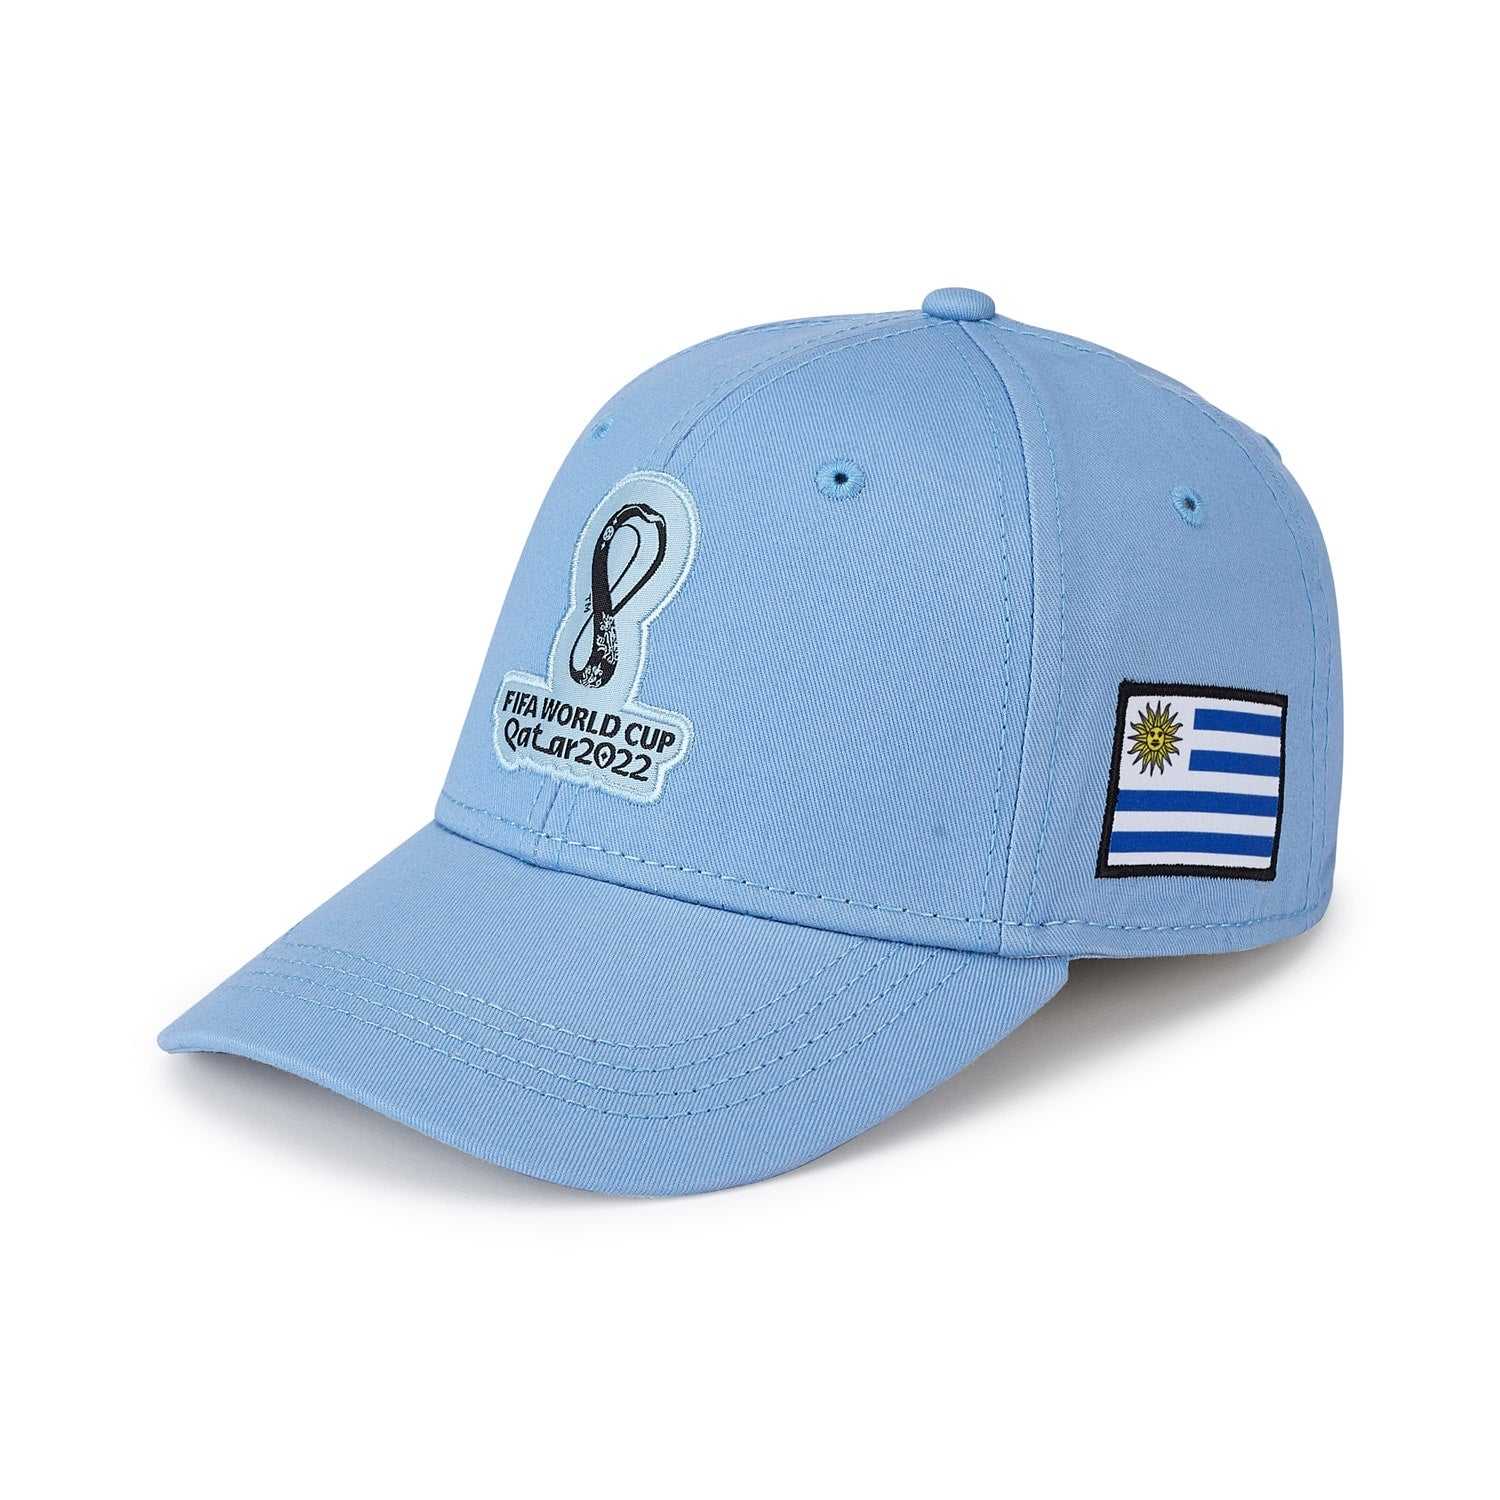 2022 World Cup Uruguay Blue Cap - Men's